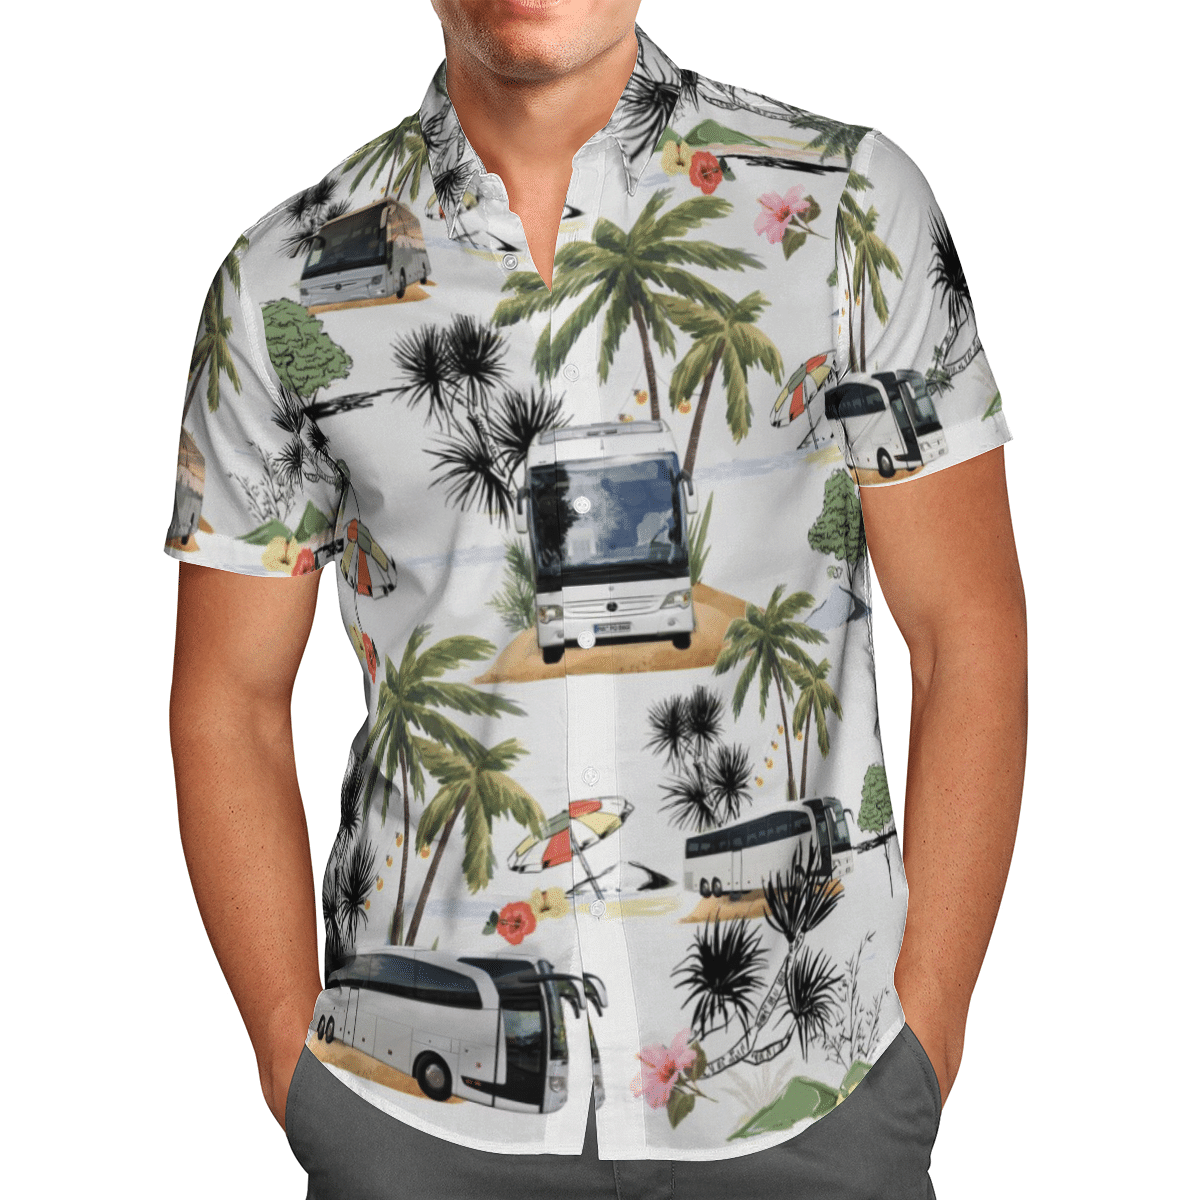 Enjoy your summer with top cool hawaiian shirt below 128